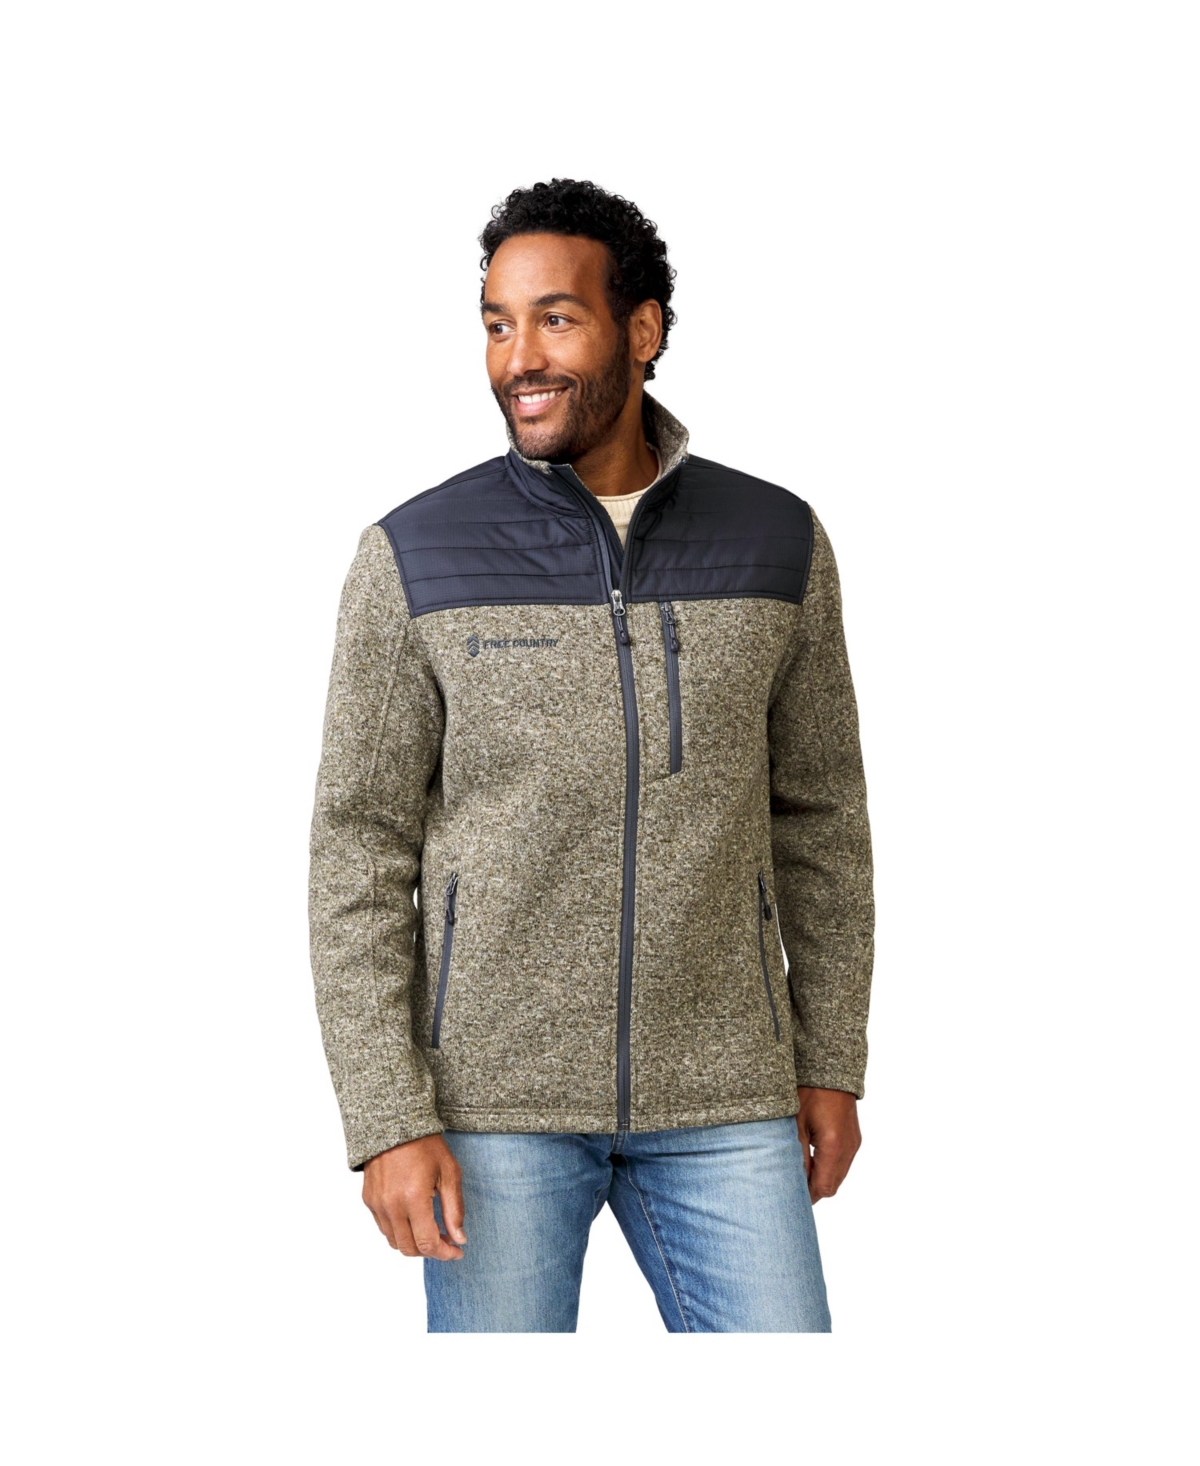 Men's Frore Sweater Knit Fleece Jacket - Khaki heather